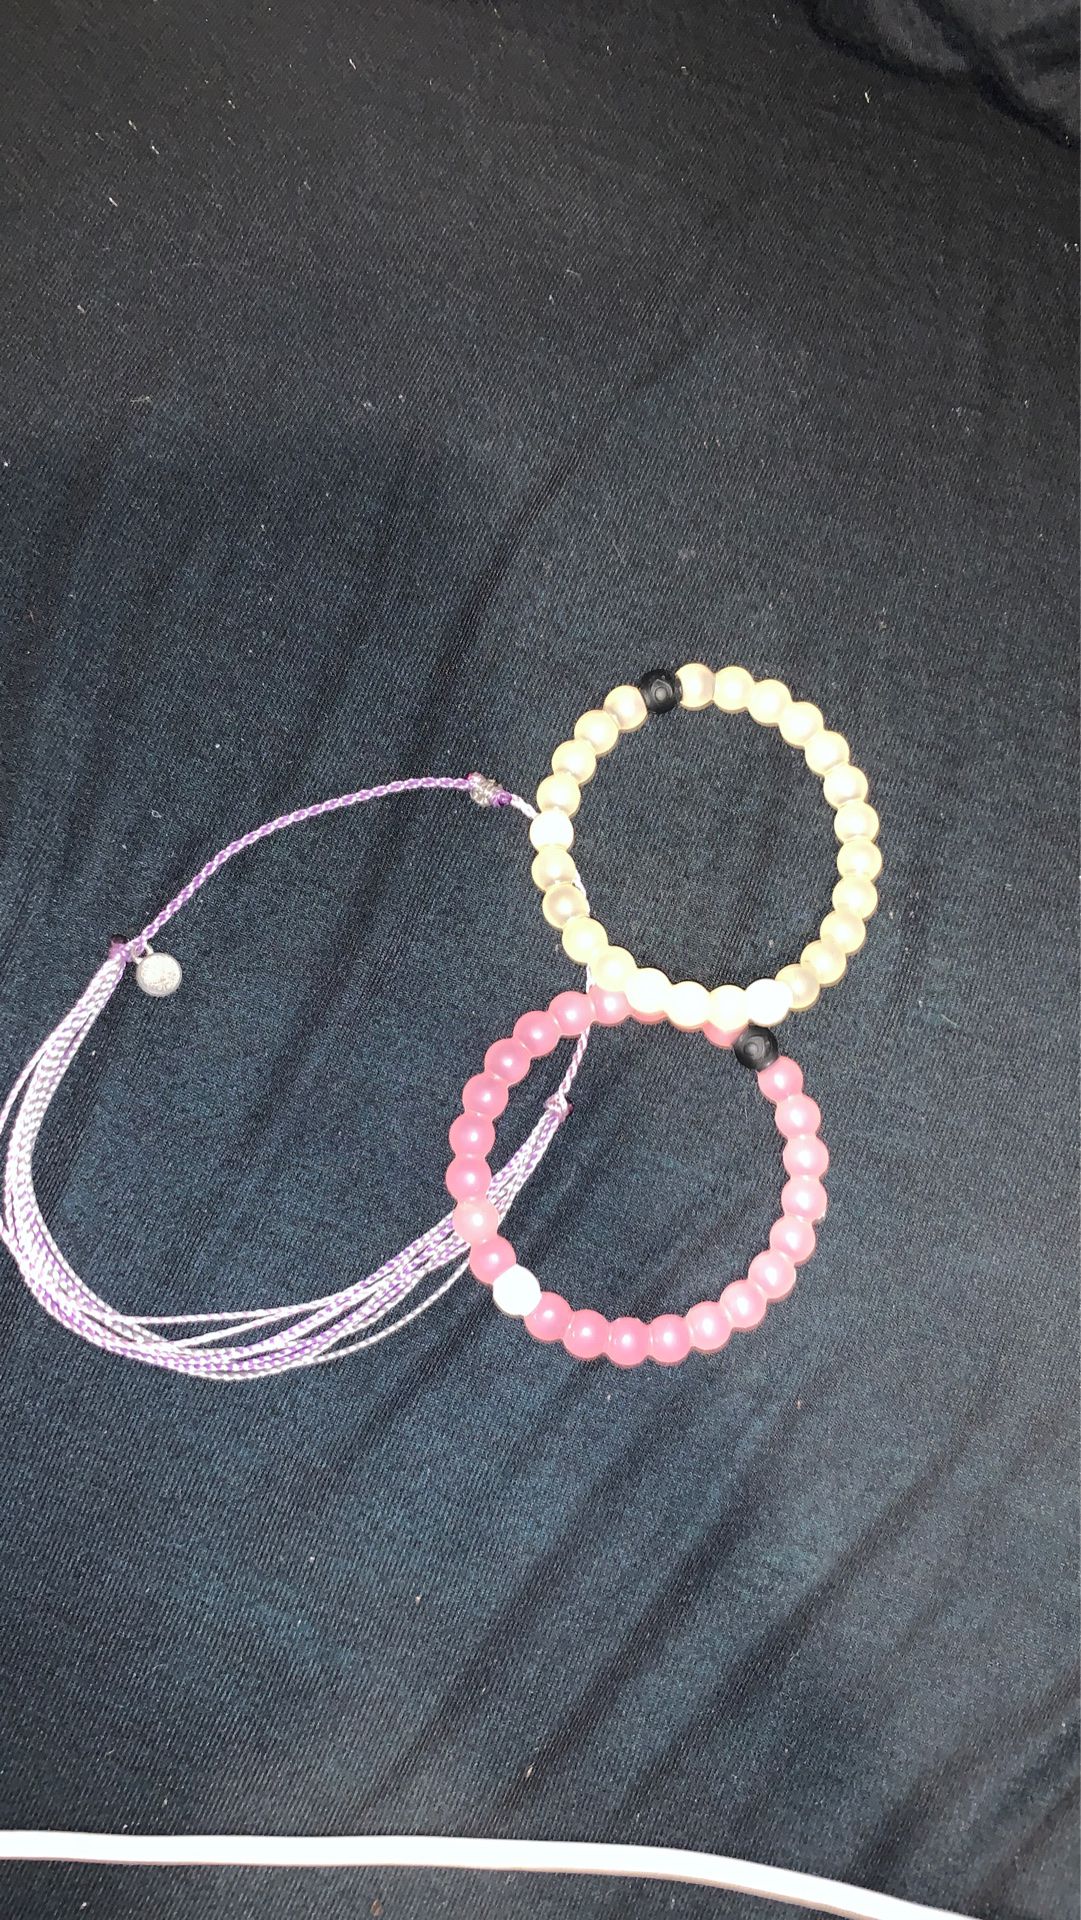 2 lokai and 1 pura vida bracelet